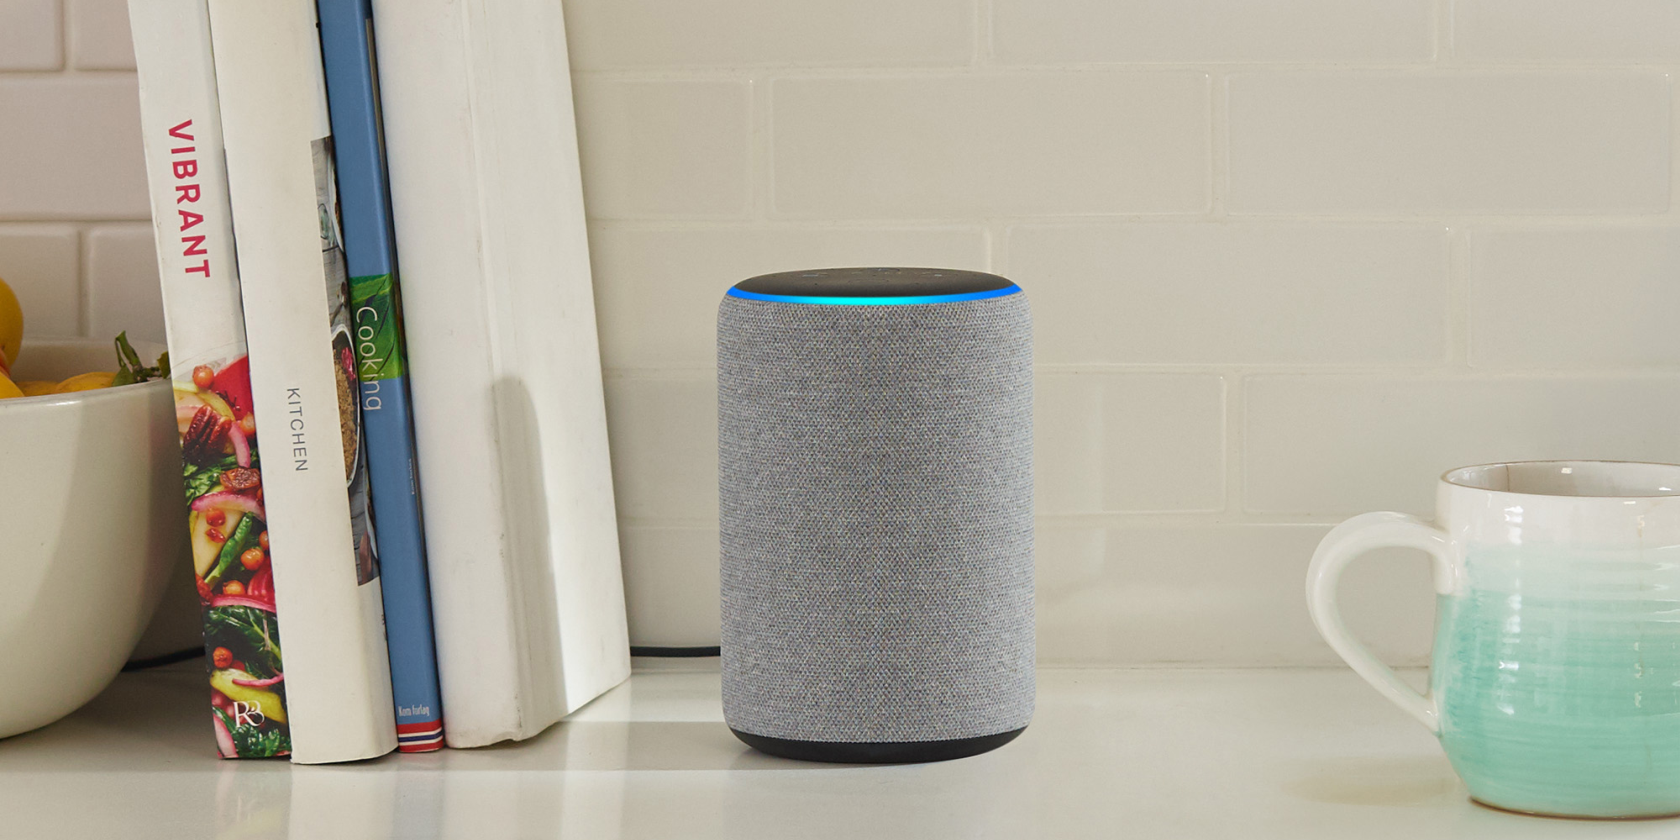 Amazon Alexa second generation smart speaker.